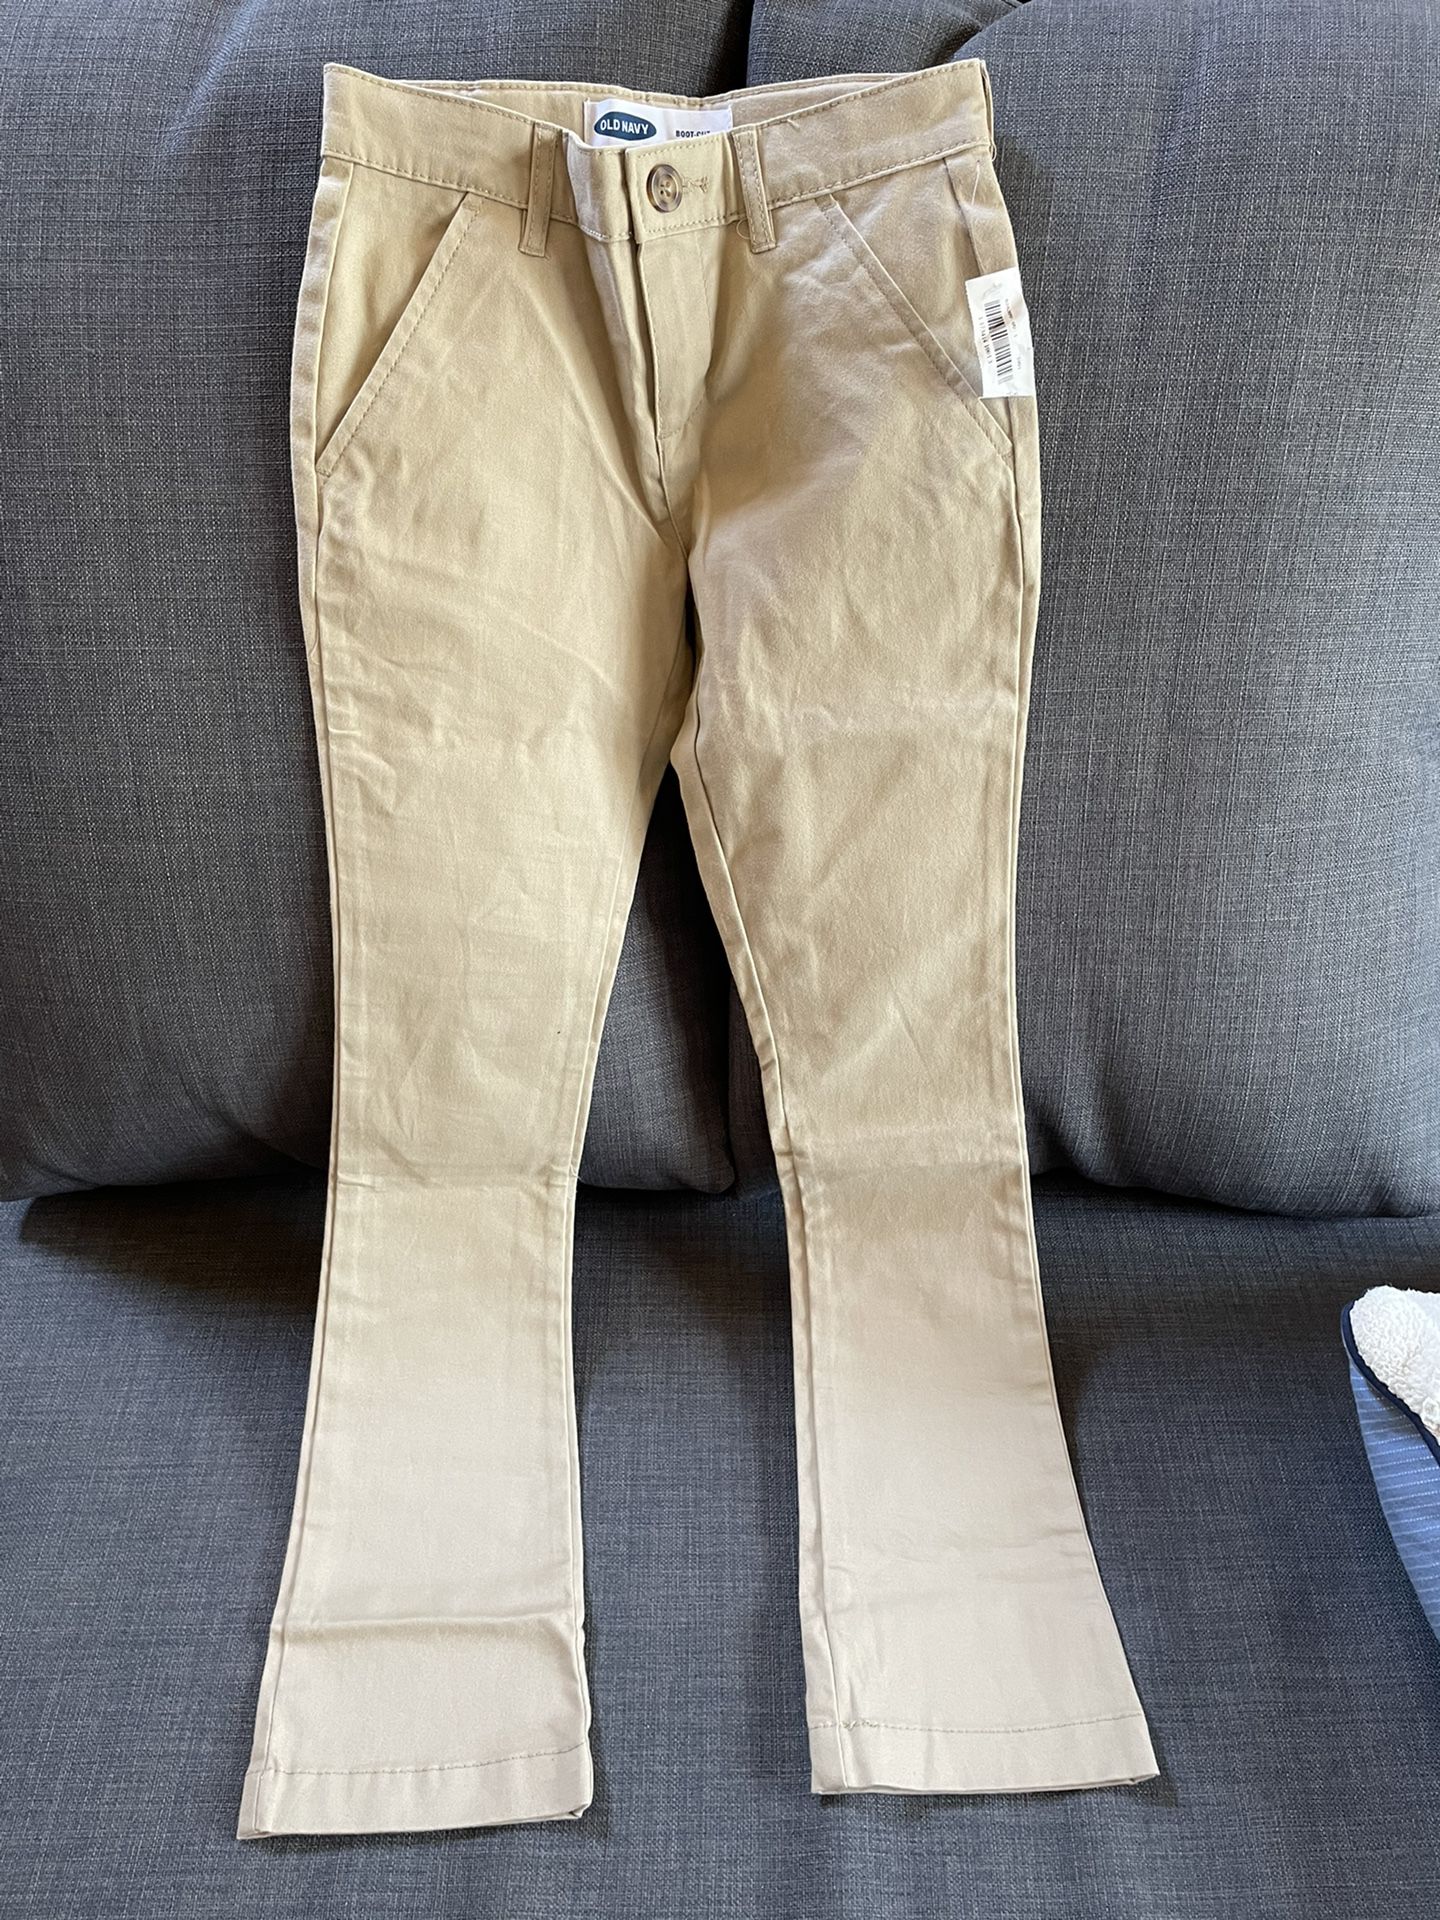 Brand new Girls Old Navy khaki boot cut uniform pants size 10 slim